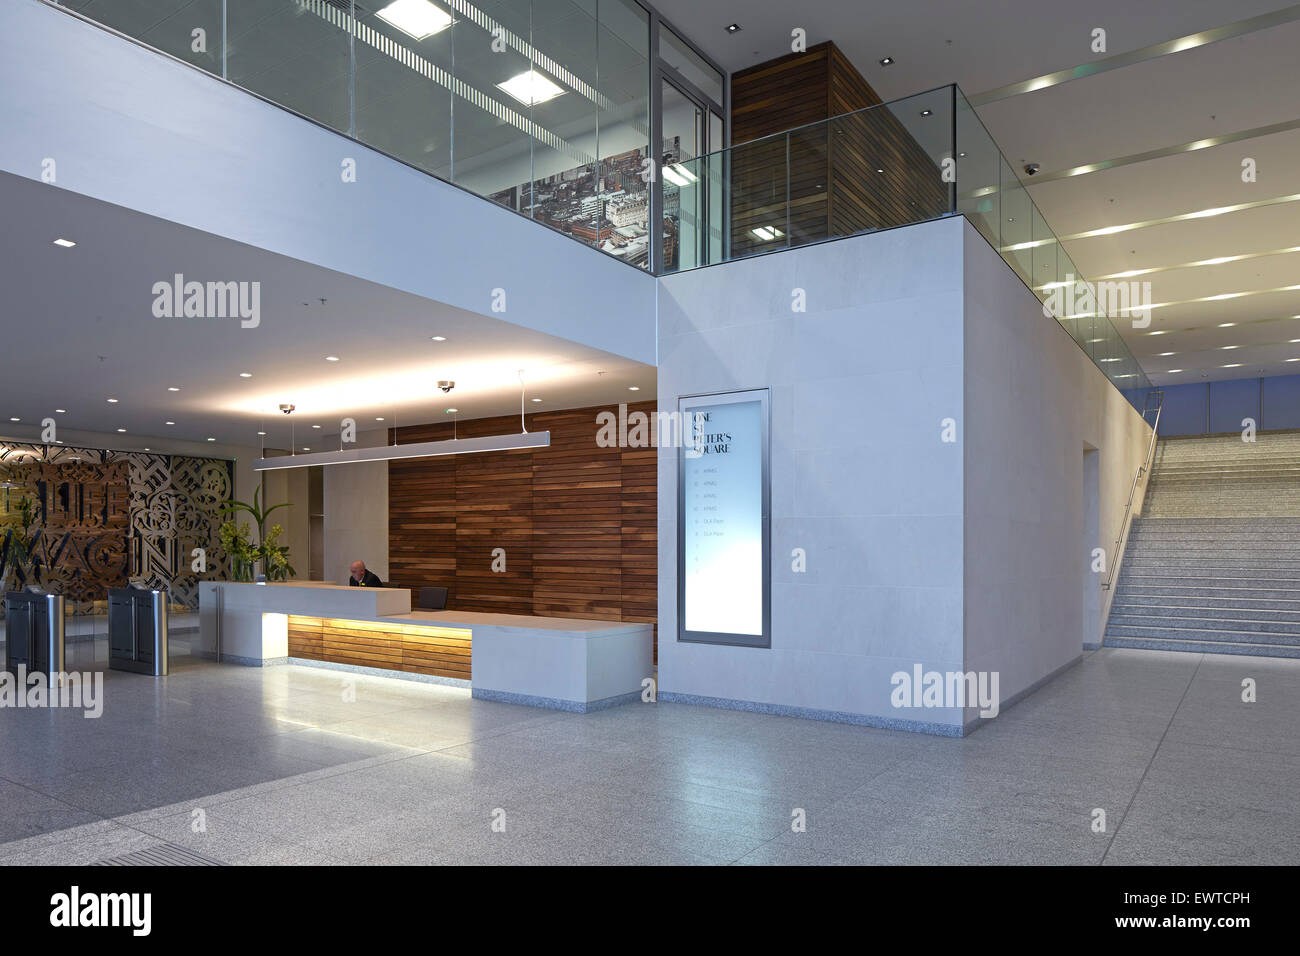 Reception area. One St Peter's Square, Manchester, United Kingdom. Architect: Glenn Howells Architects, 2015. Stock Photo